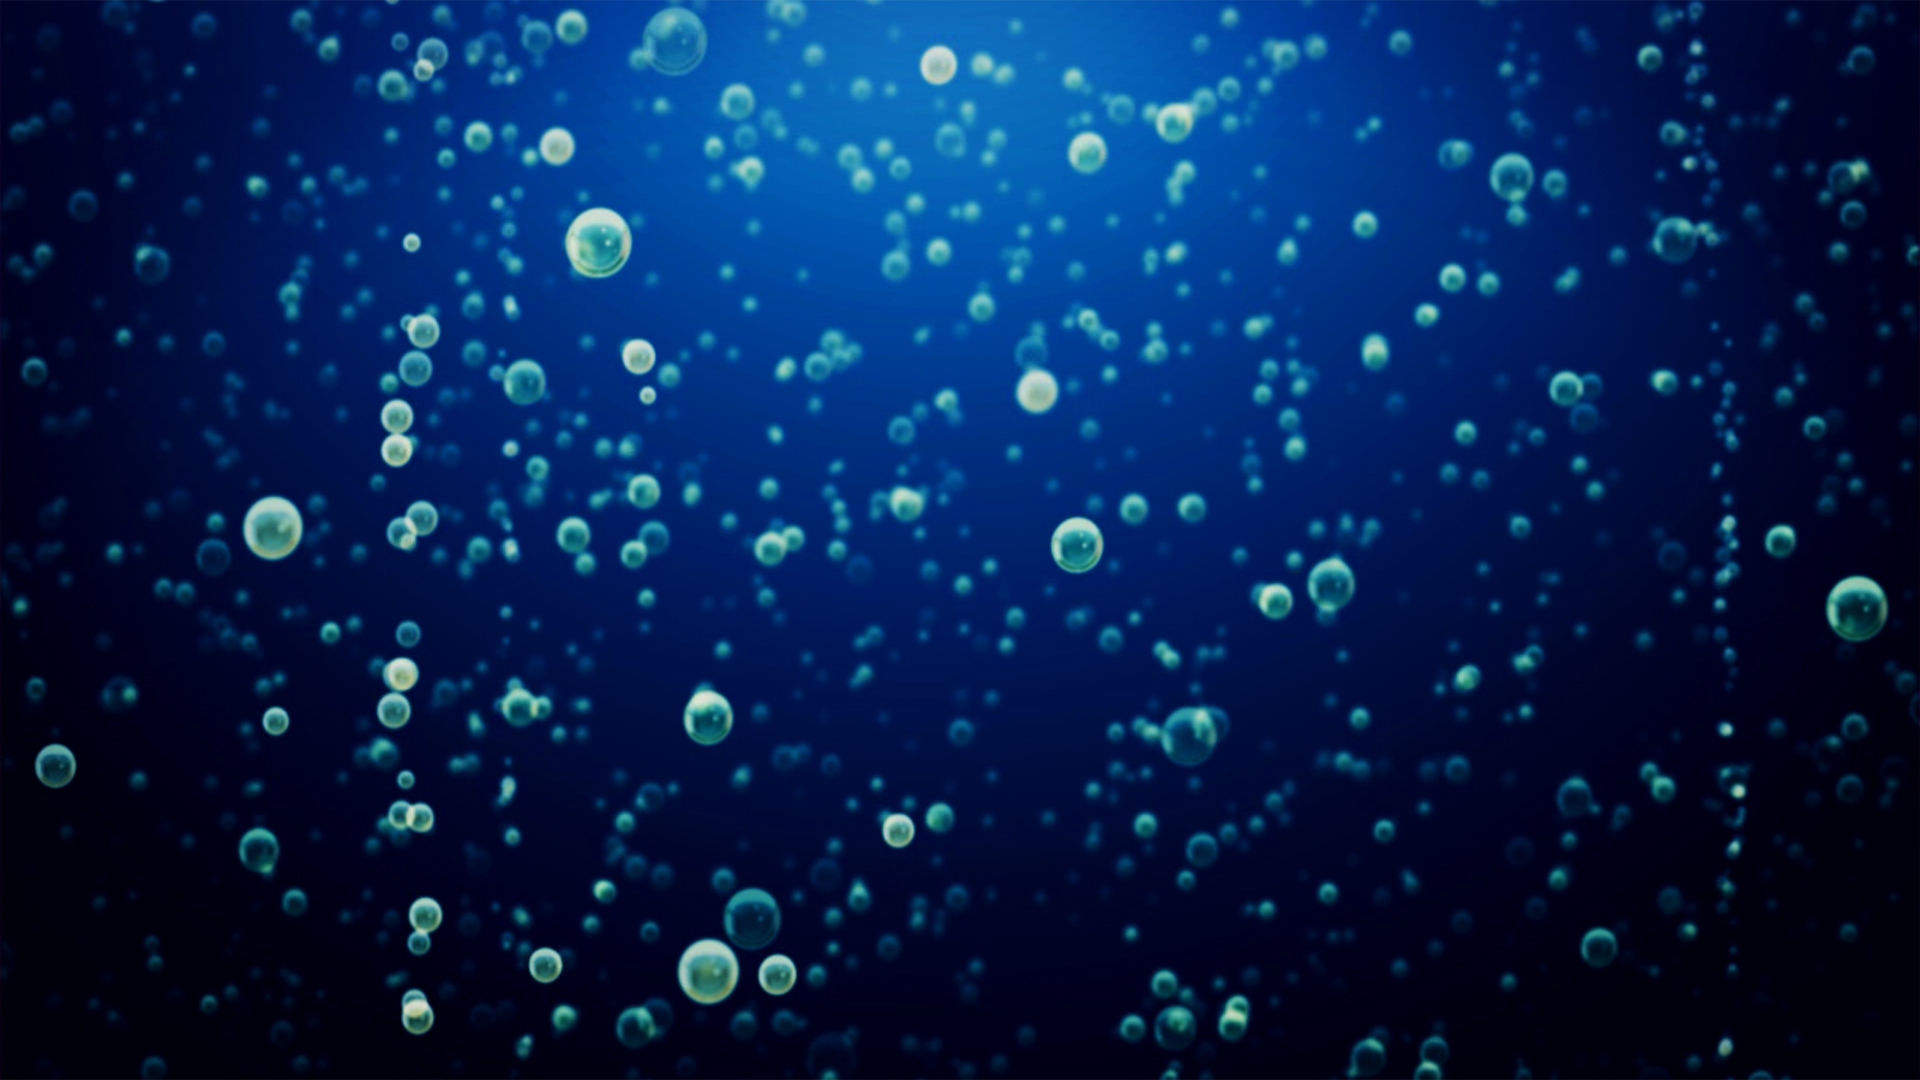 screen savers wallpapers explore bubbles air